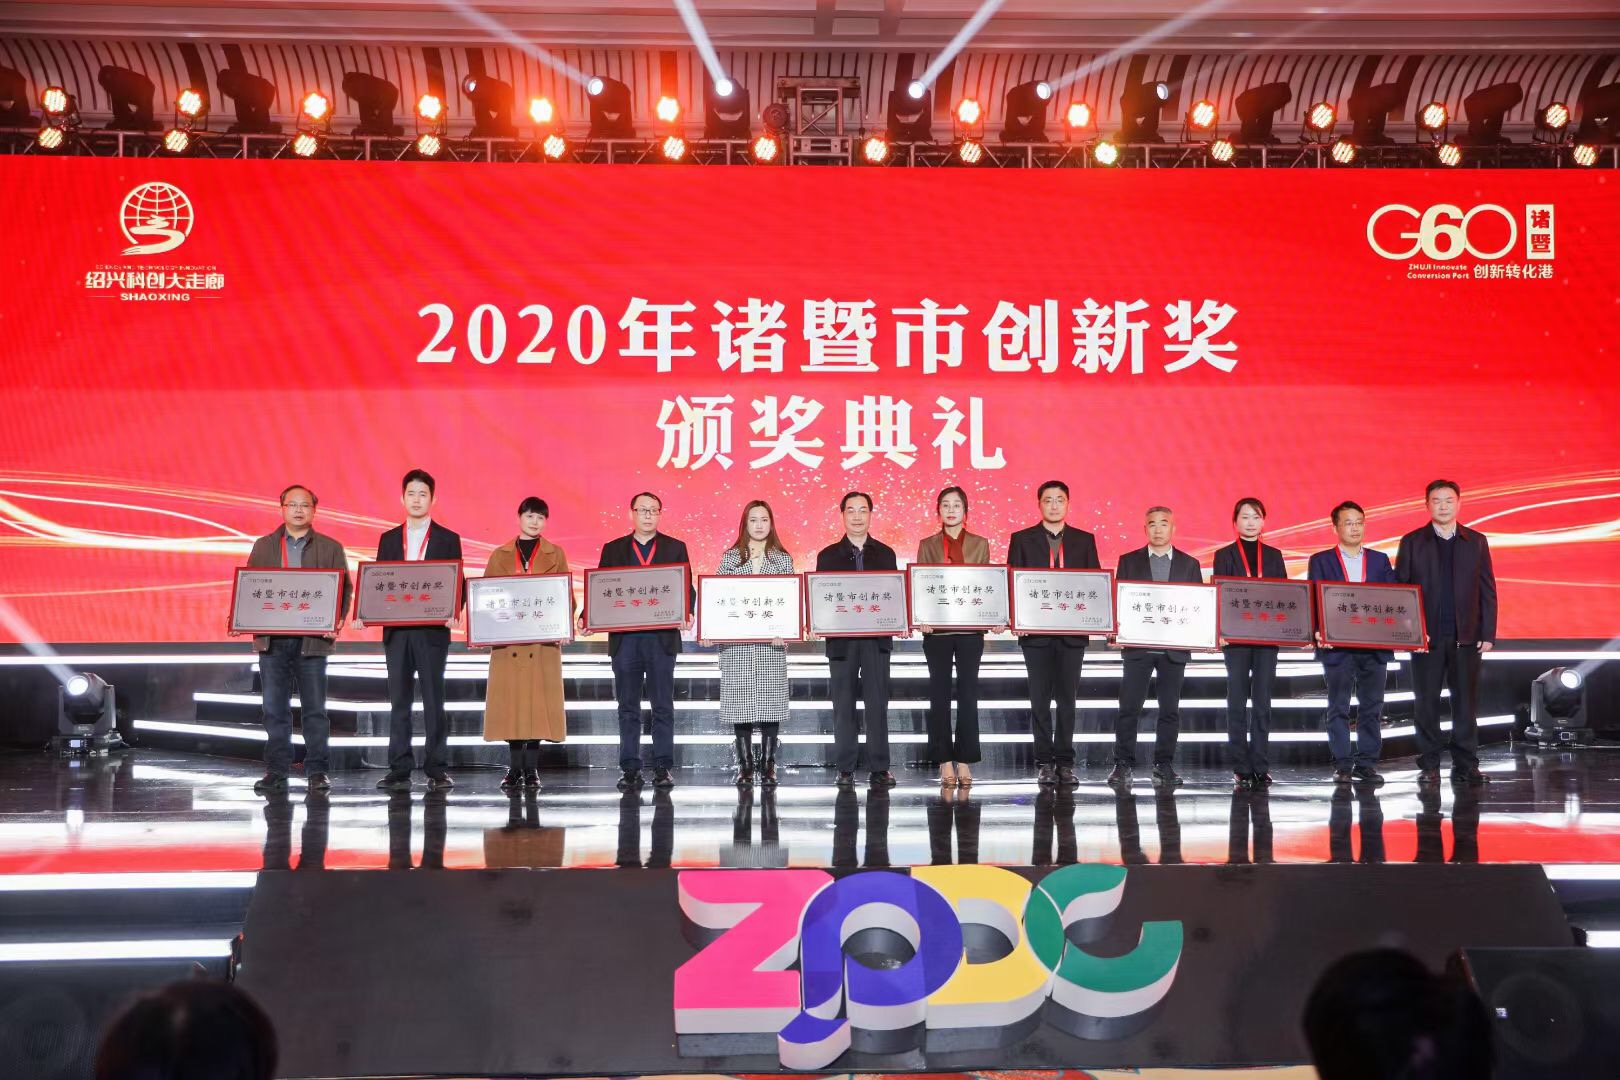 The company's product technology won the third prize of the 2020 Zhuji Innovation Award!